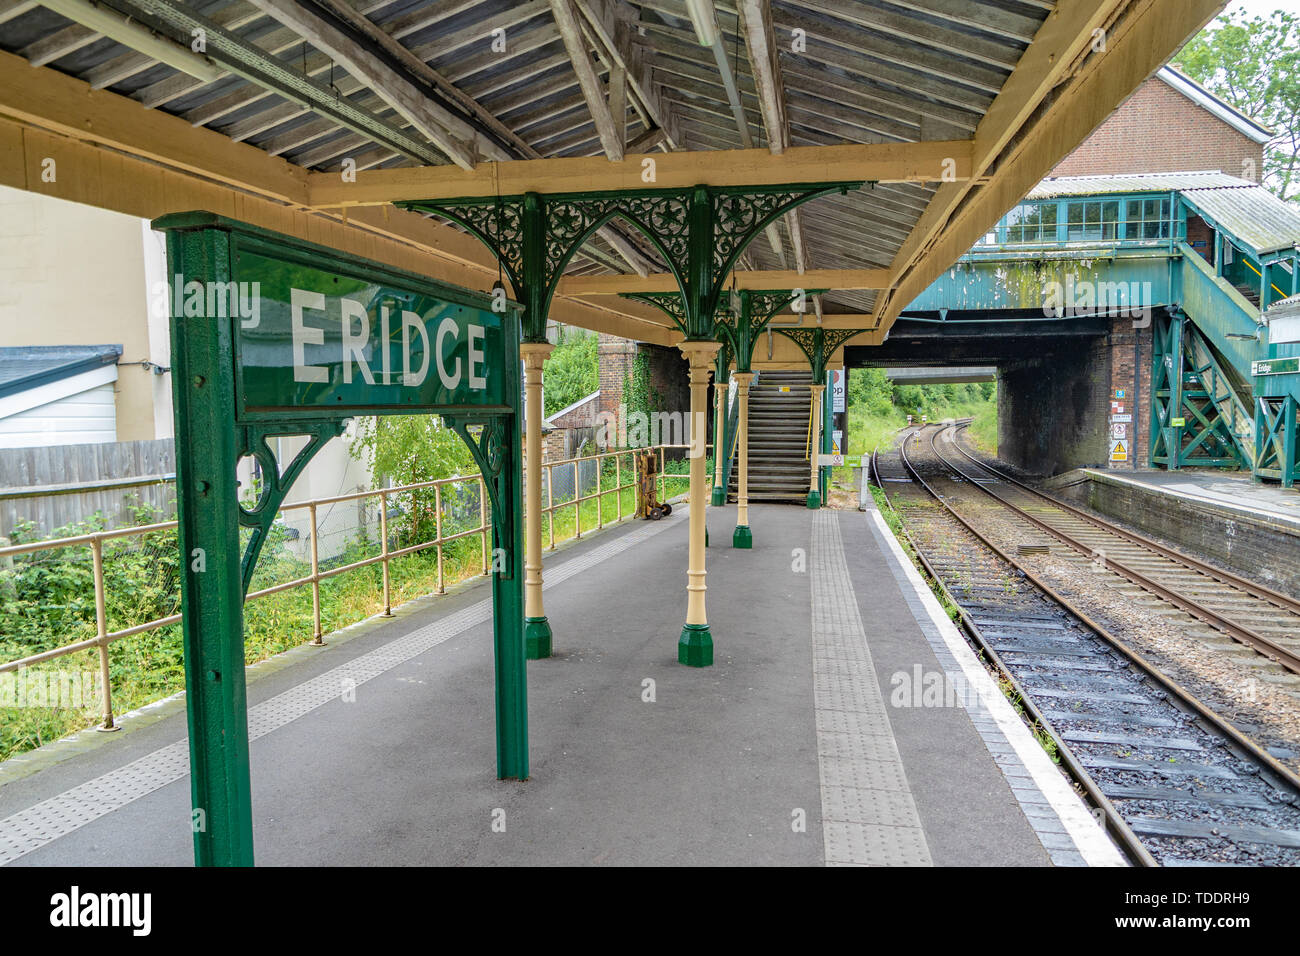 Eridge station platform sign Stock Photo